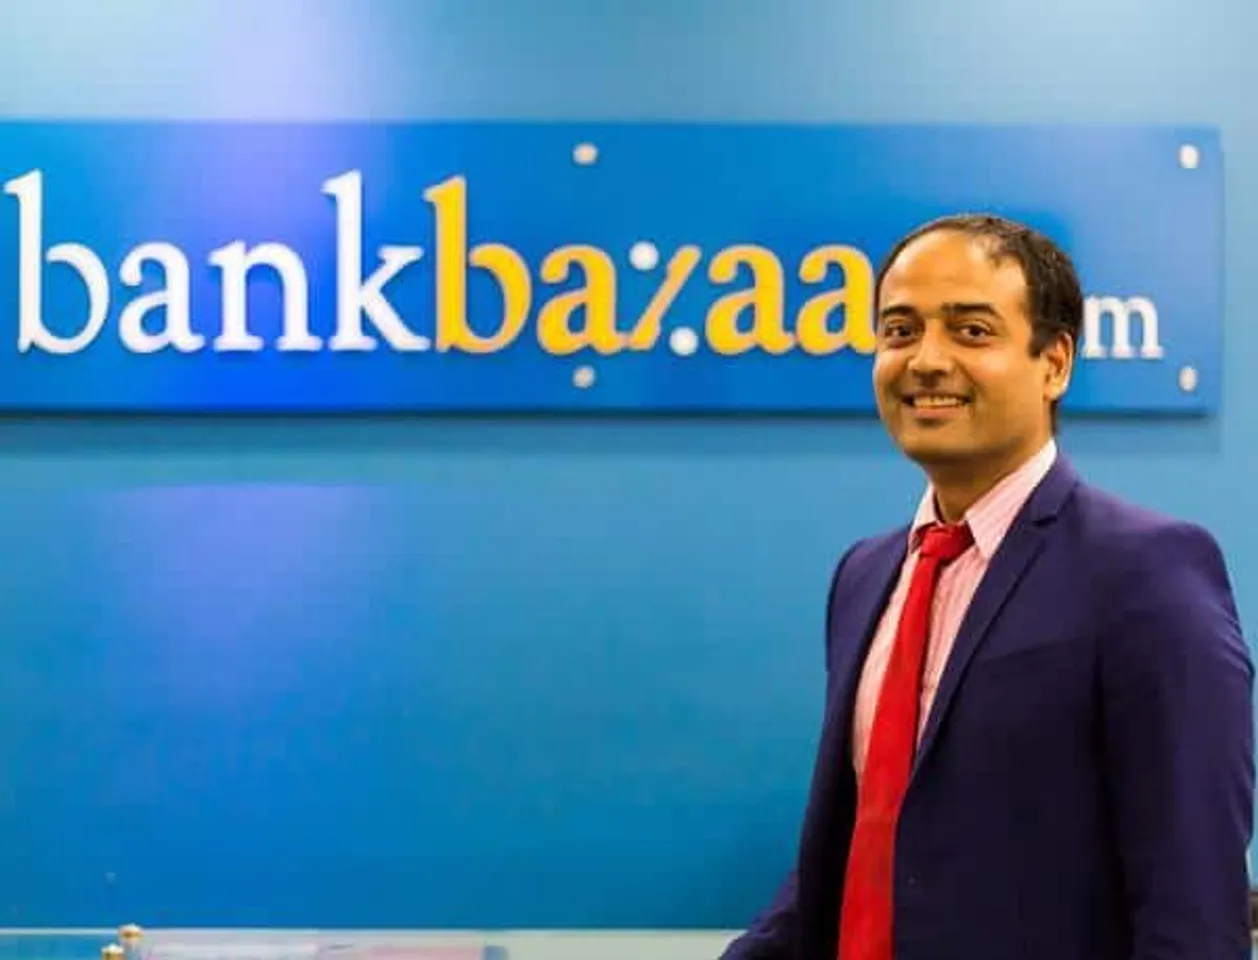 BankBazaar.com, mobile app, fuel rate trackers, better visualisation